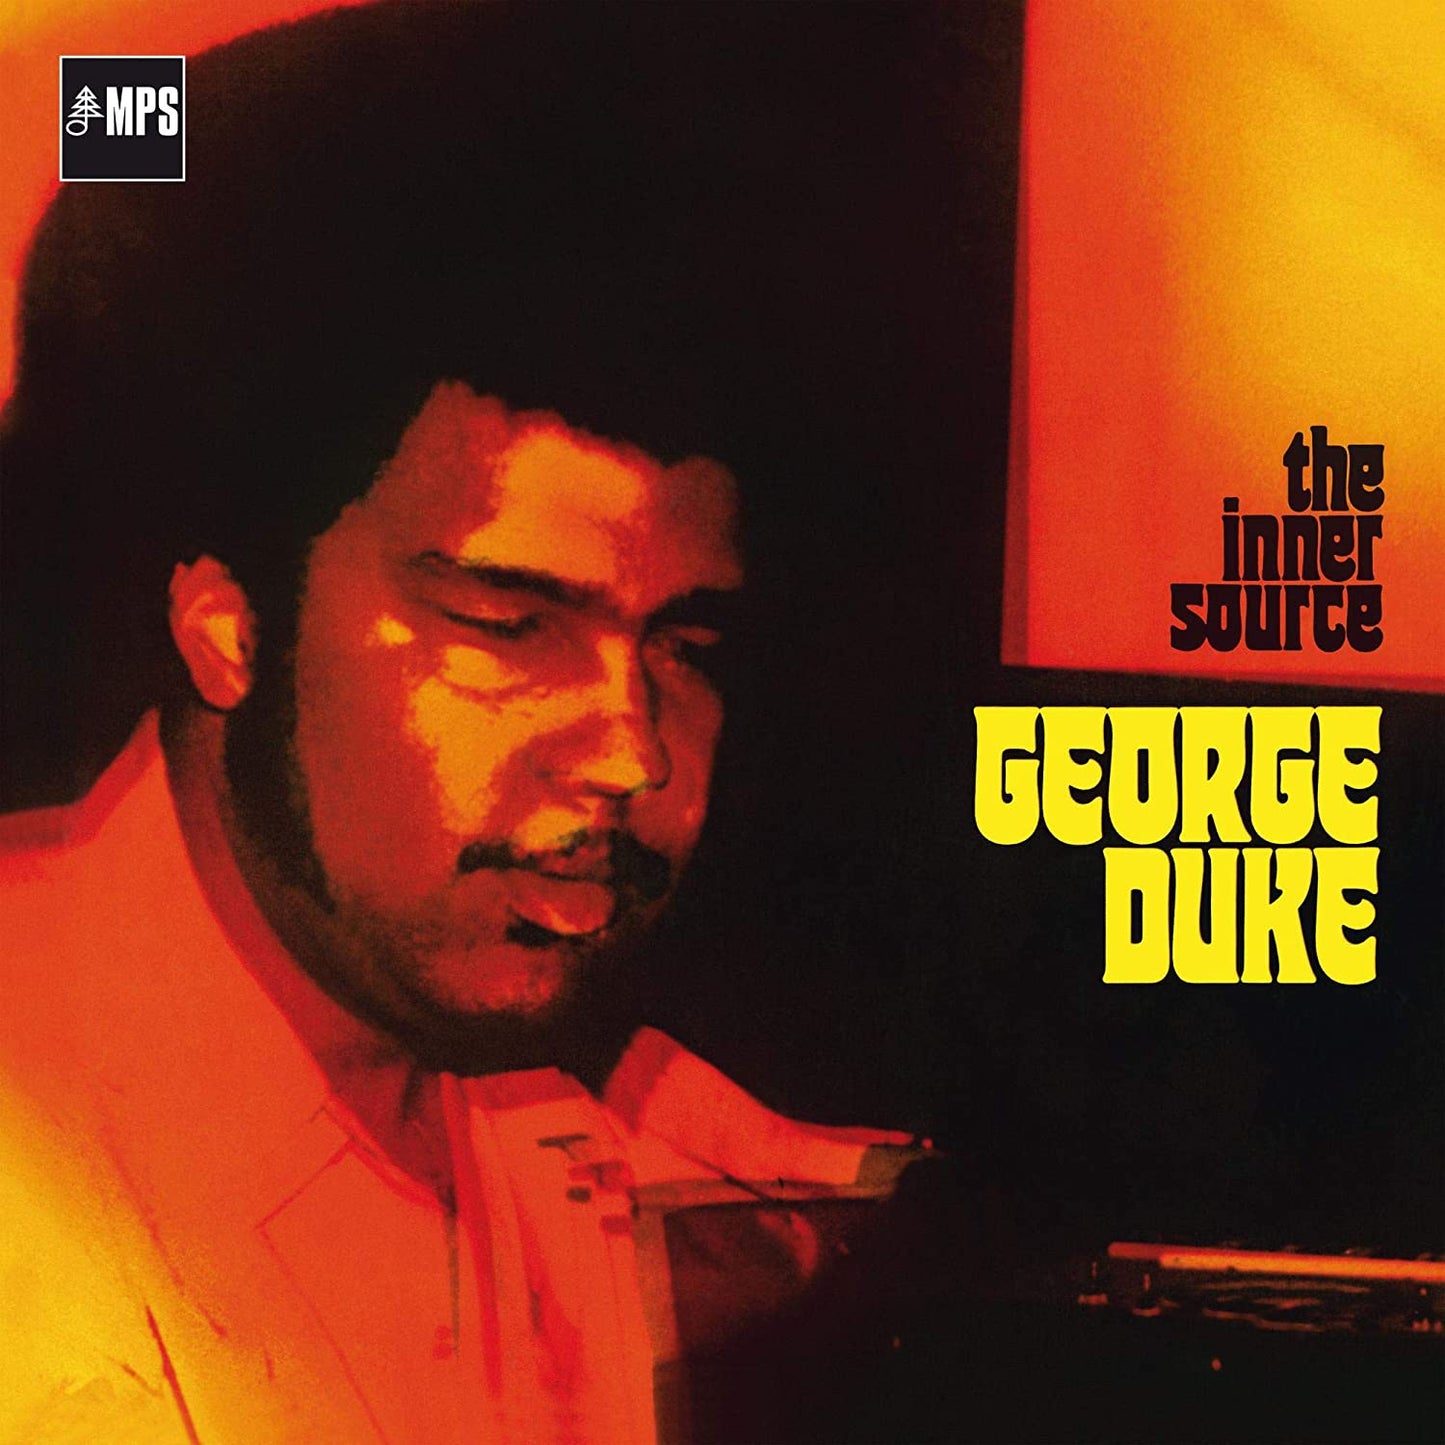 George Duke - The Inner Source - 2LP